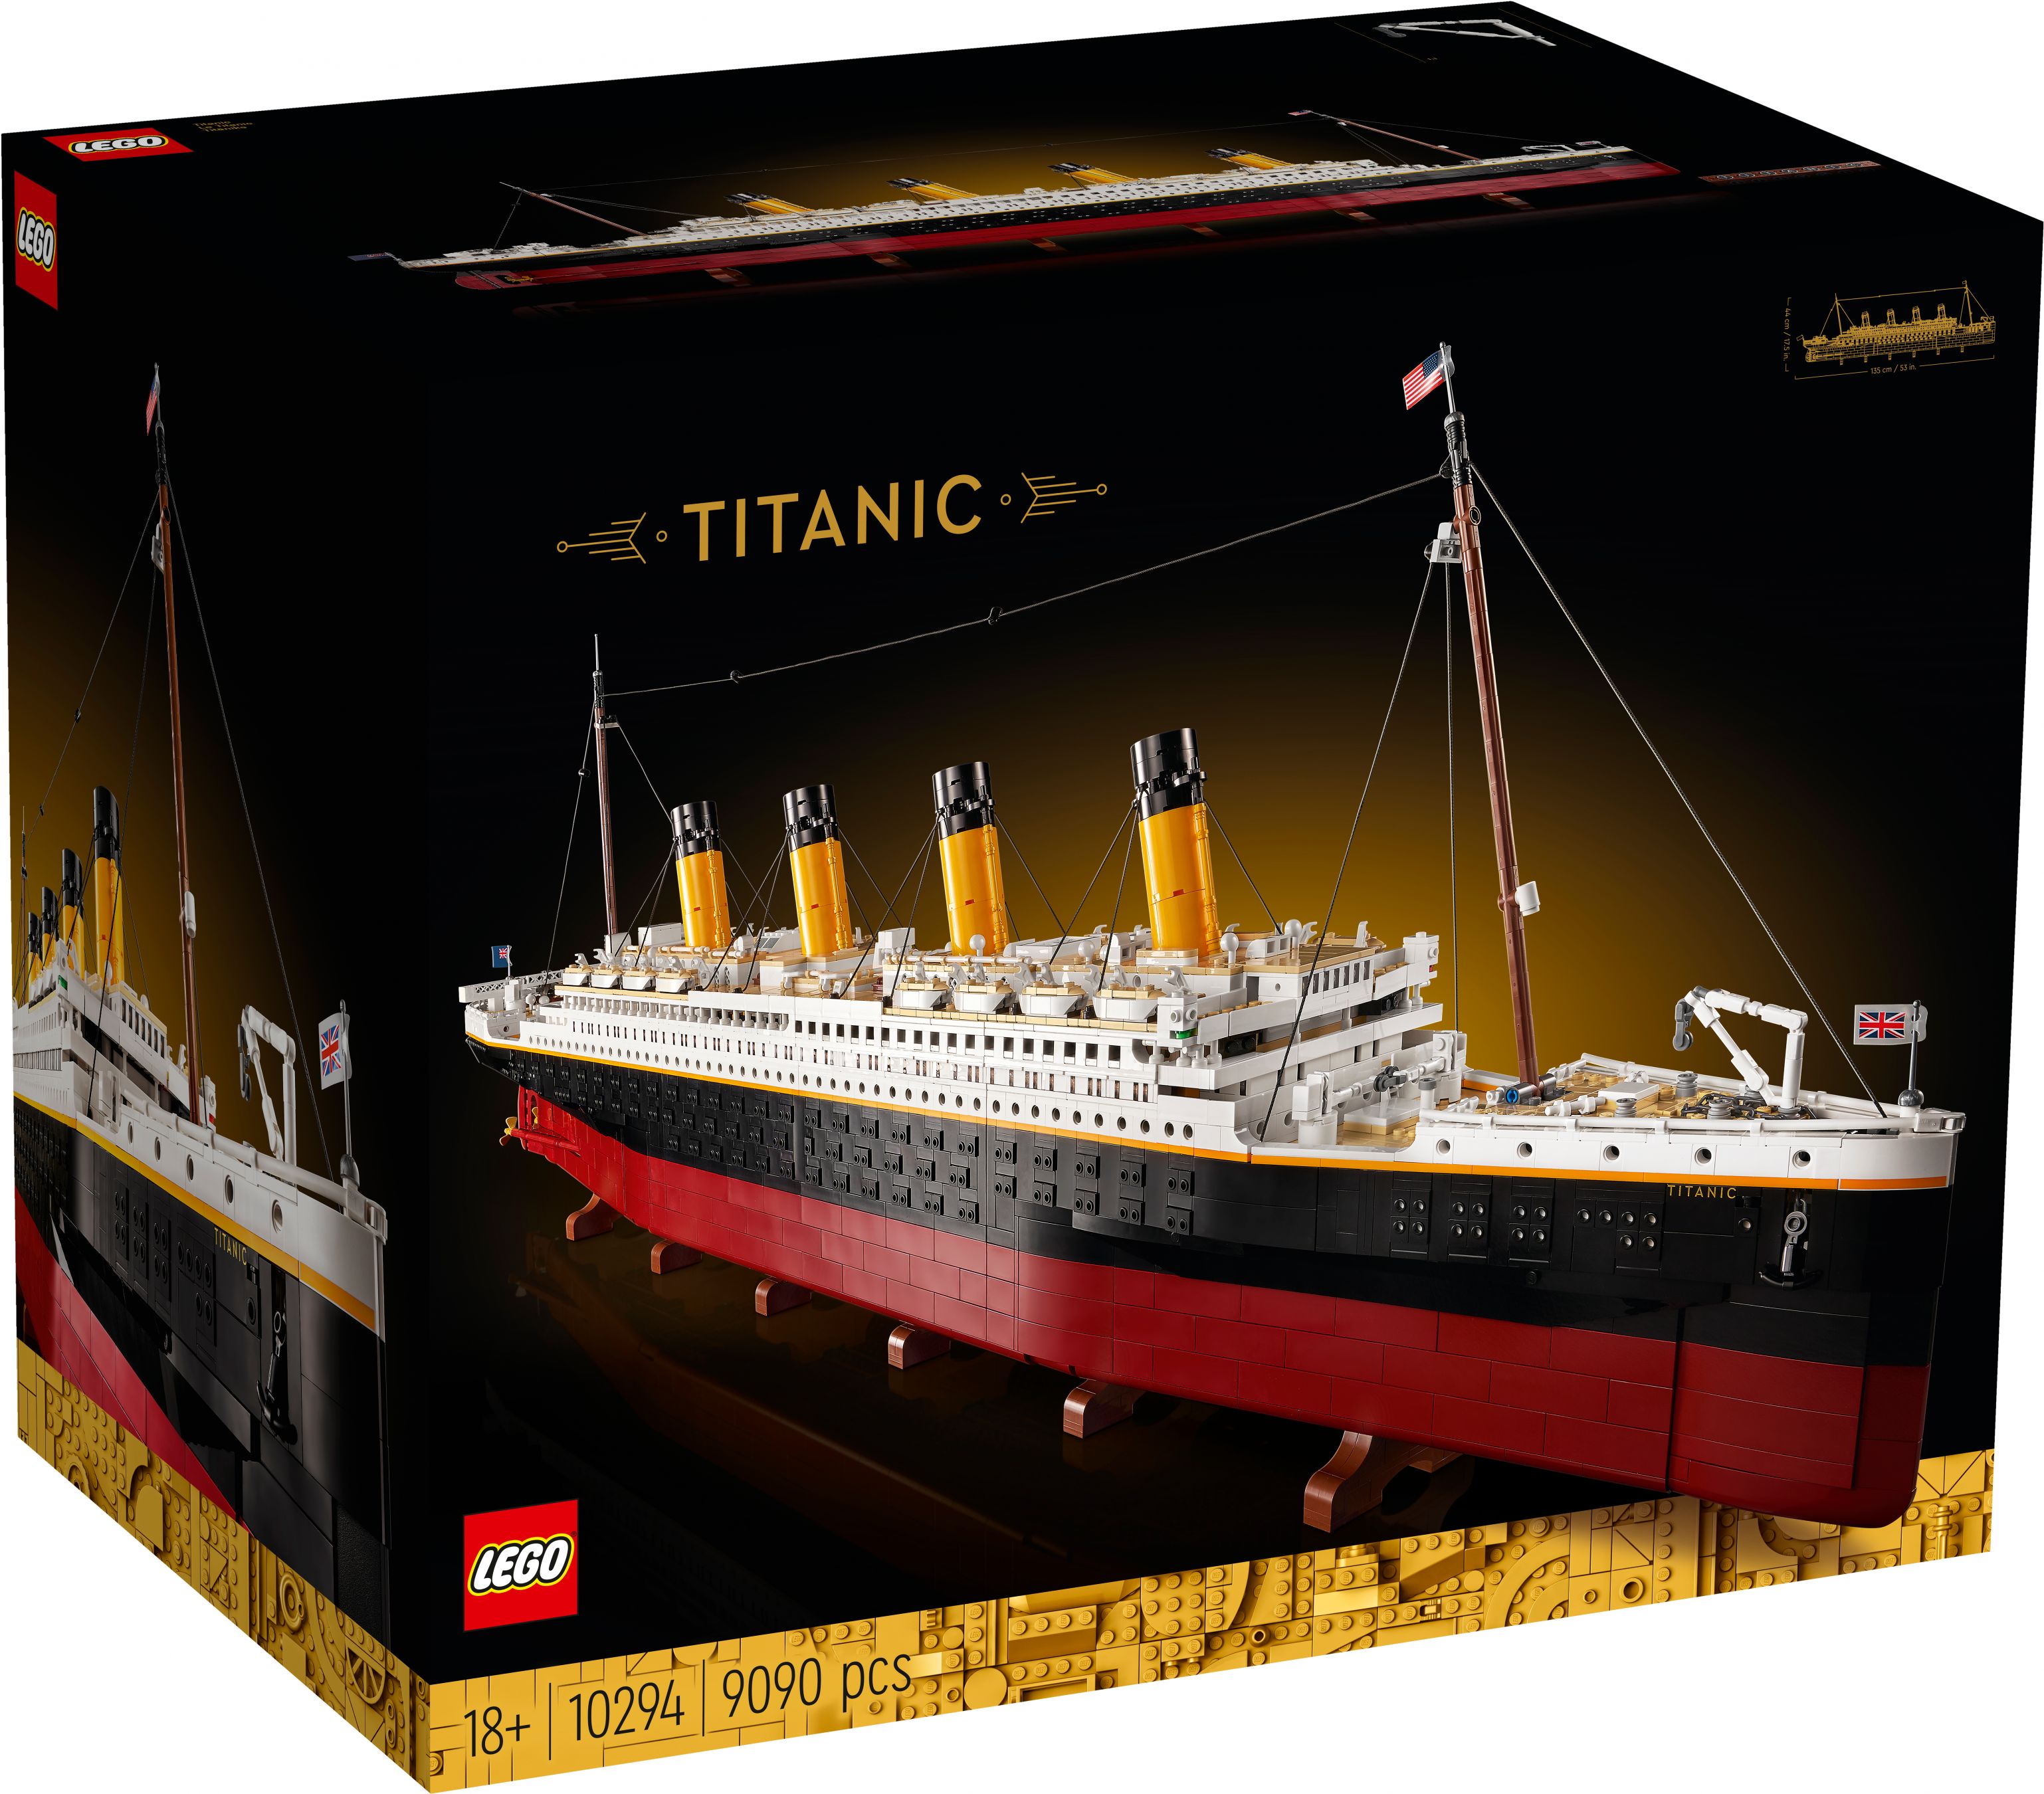 LEGO Advanced Models 10294 LEGO® Titanic LEGO_10294_Box1_v29.jpg